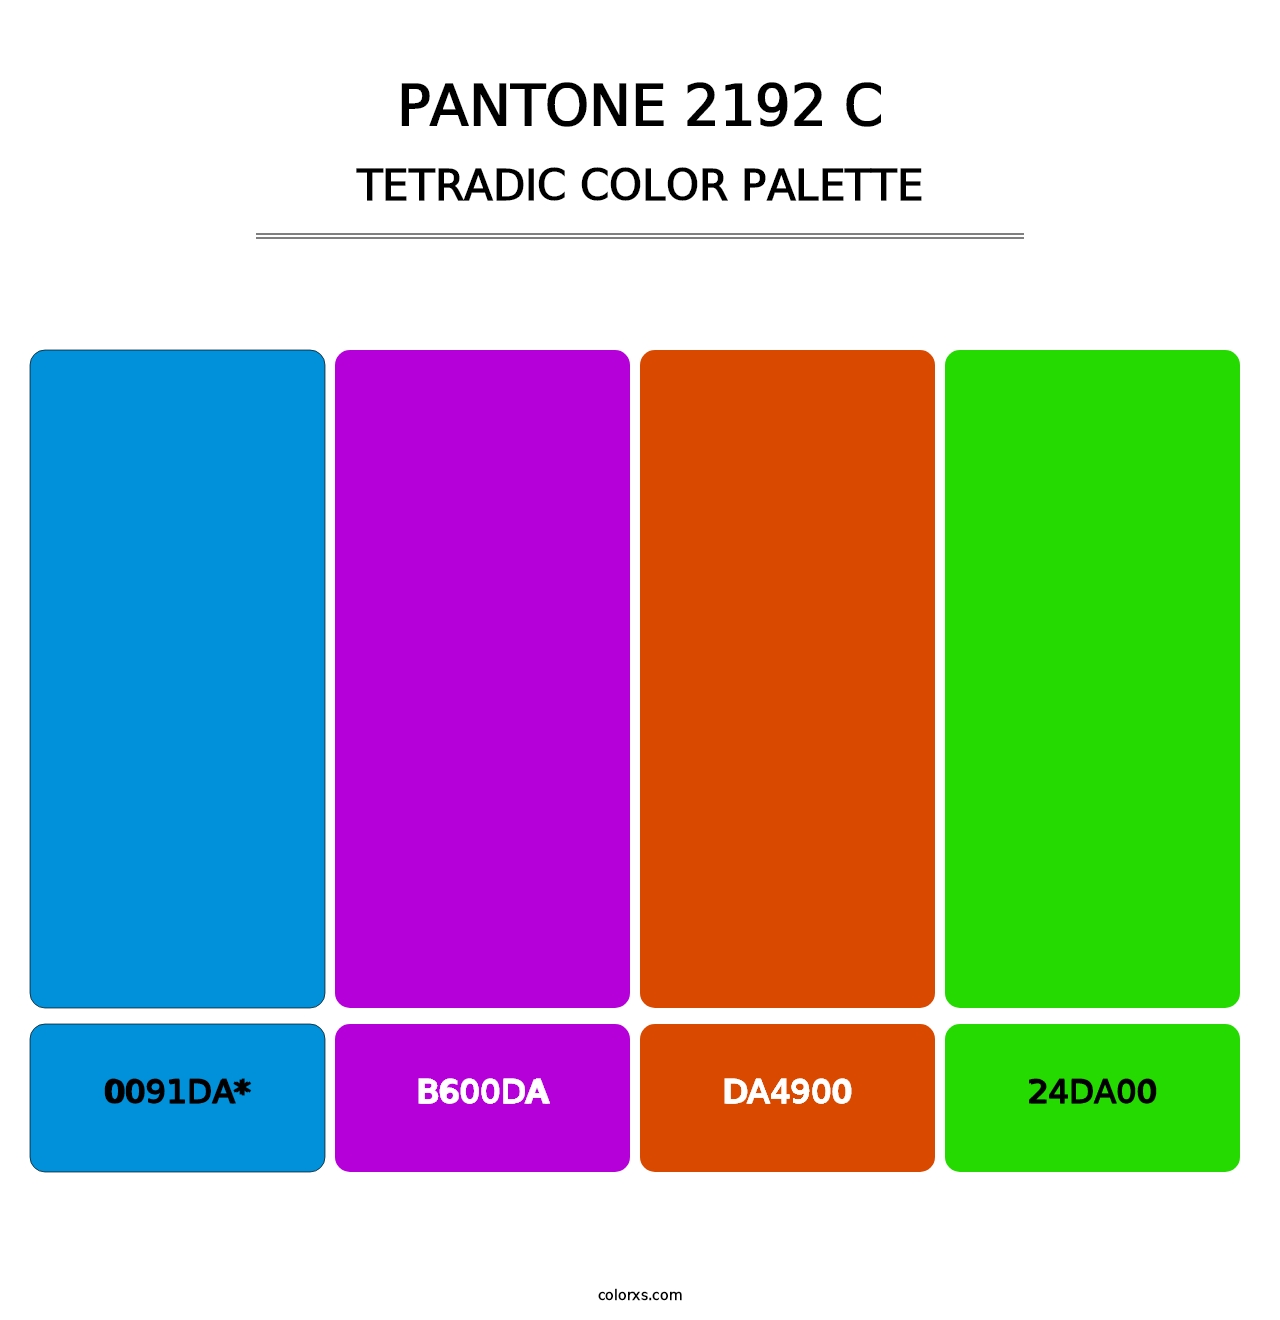 PANTONE 2192 C - Tetradic Color Palette